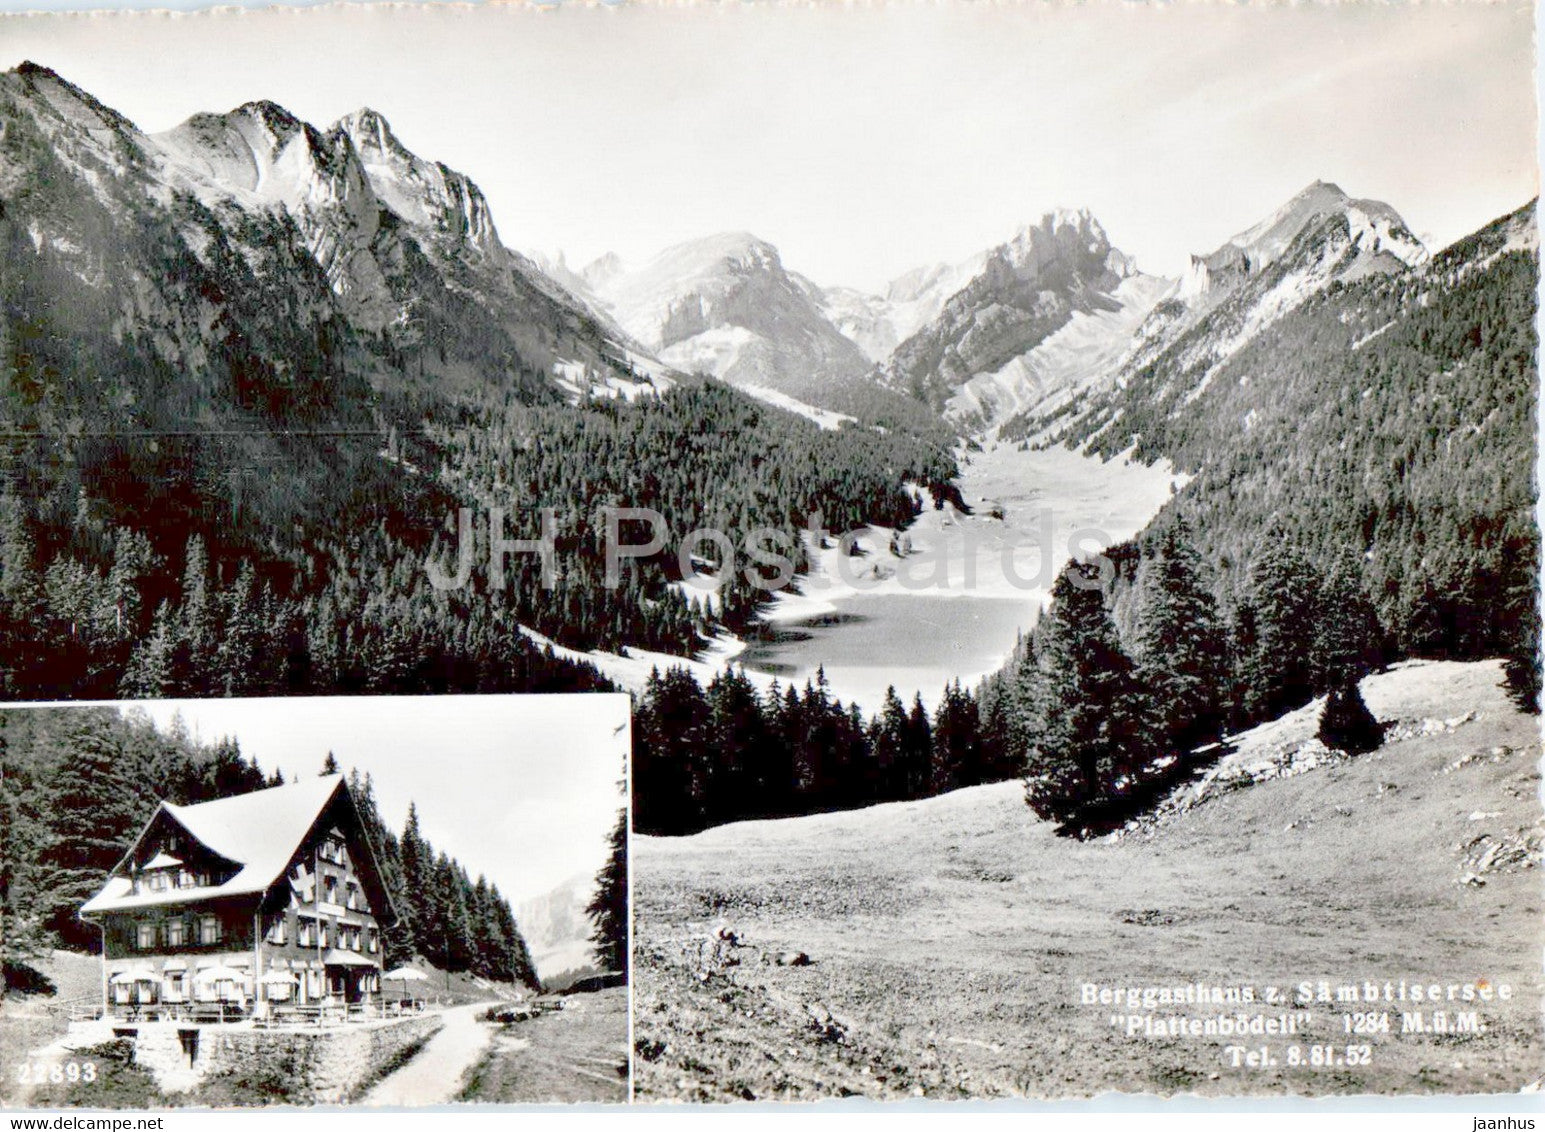 Berggasthaus z Sambtisersee Plattenbodeli 1284 m - 22893 - old postcard - Switzerland - unused - JH Postcards